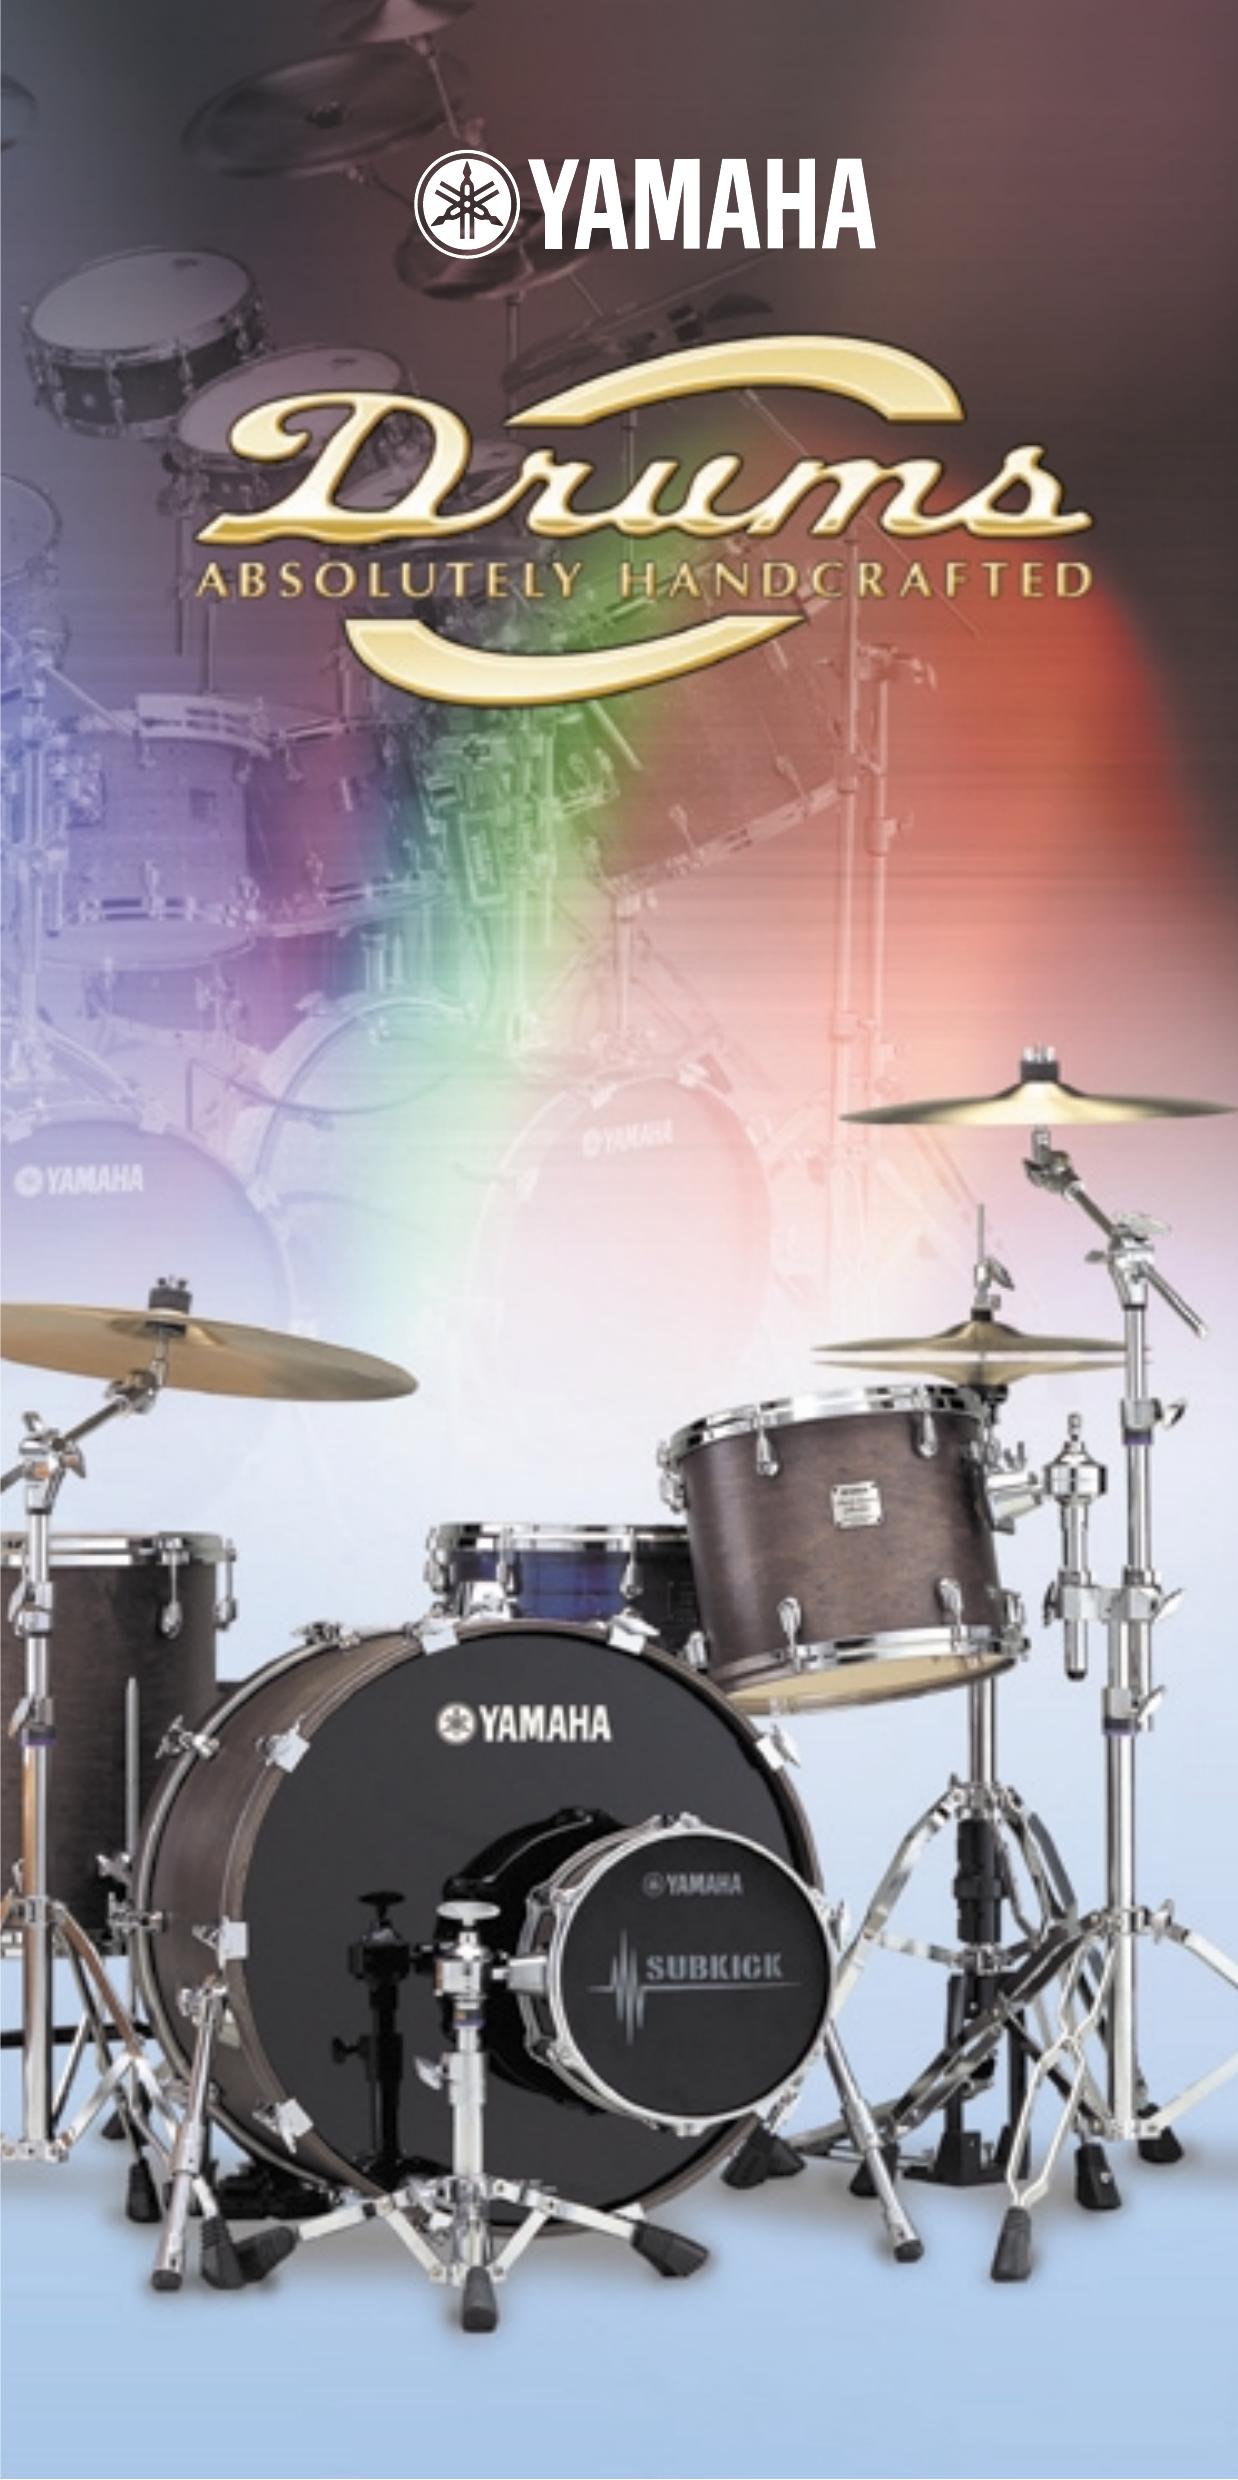 Yamaha ATT1513U Drums User Manual